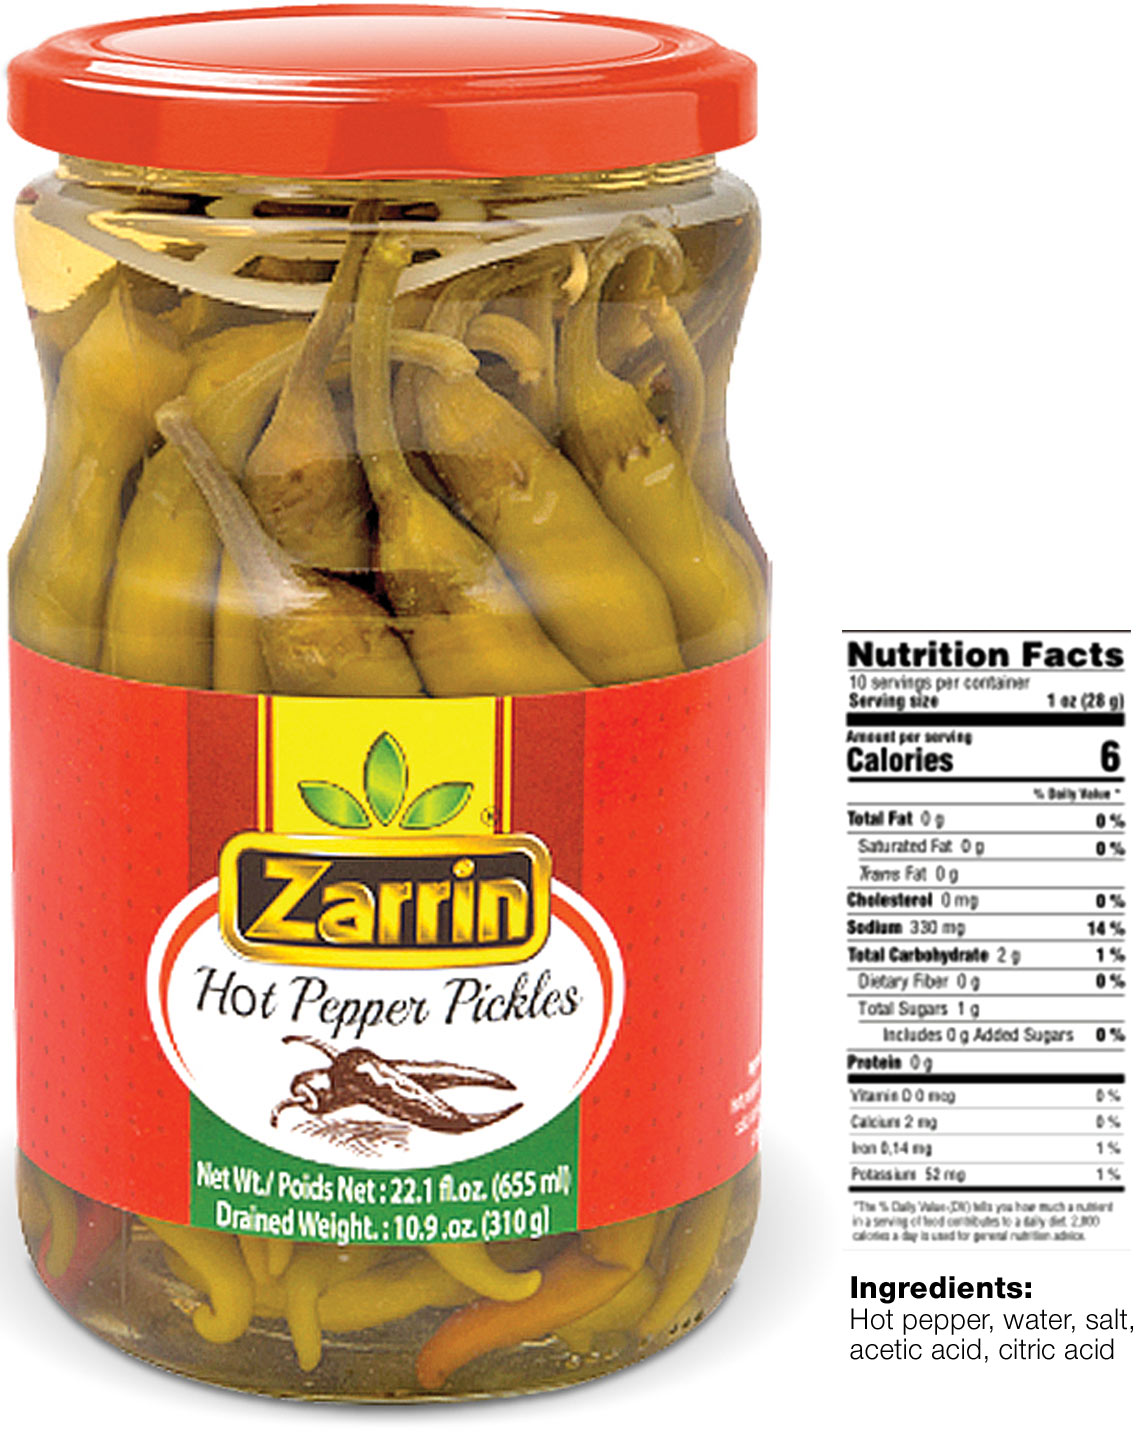 Zarrin hot frenk pepper pickles in 22.1 oz glass jar.